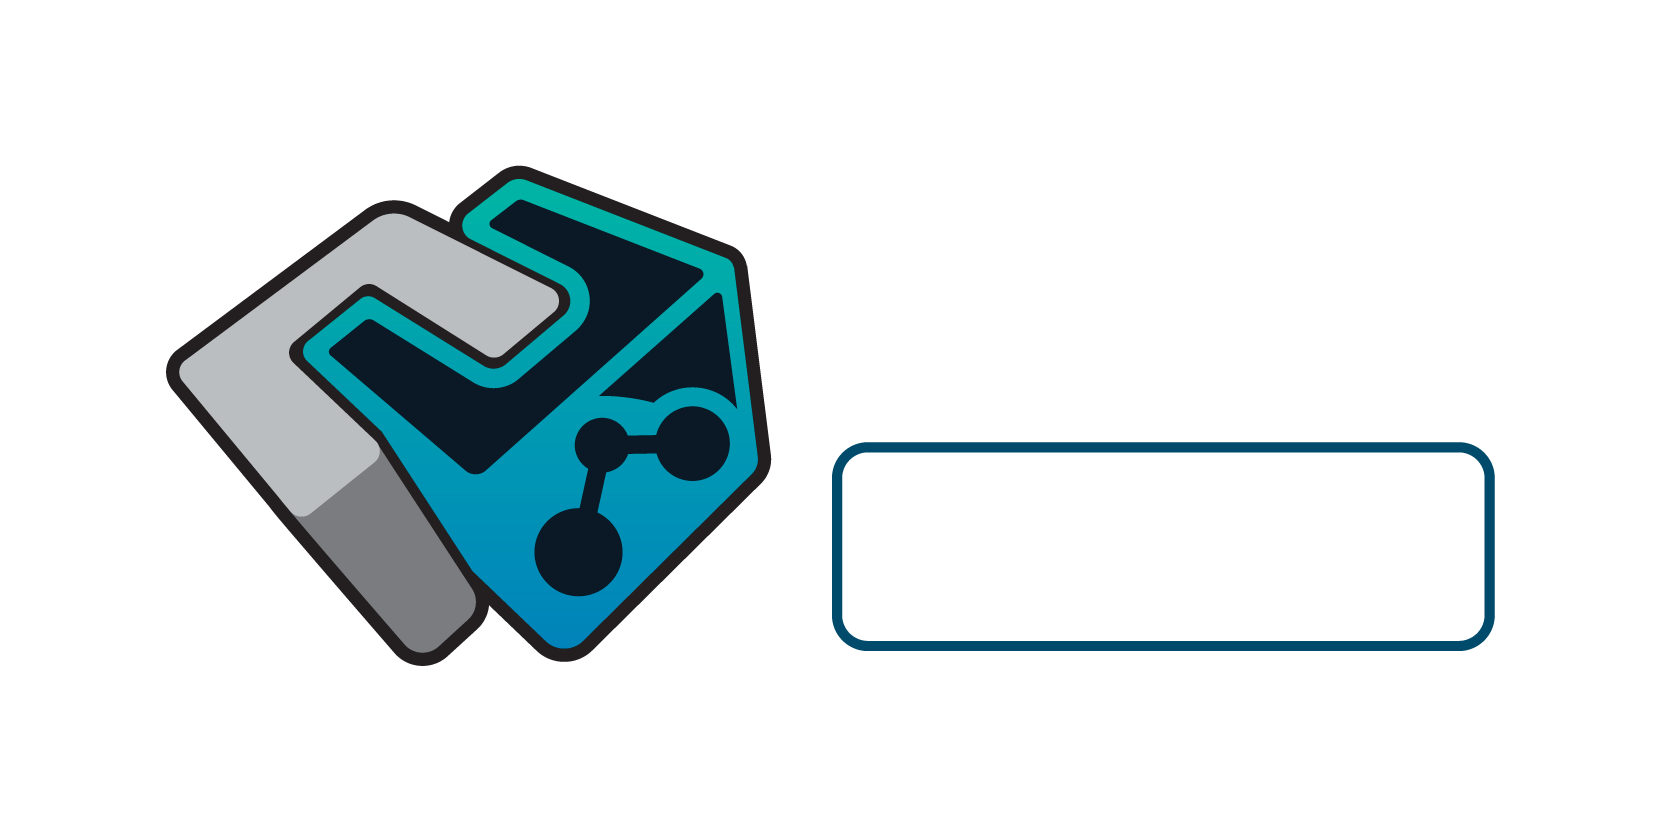 logo_vts_perform.png (61 KB)